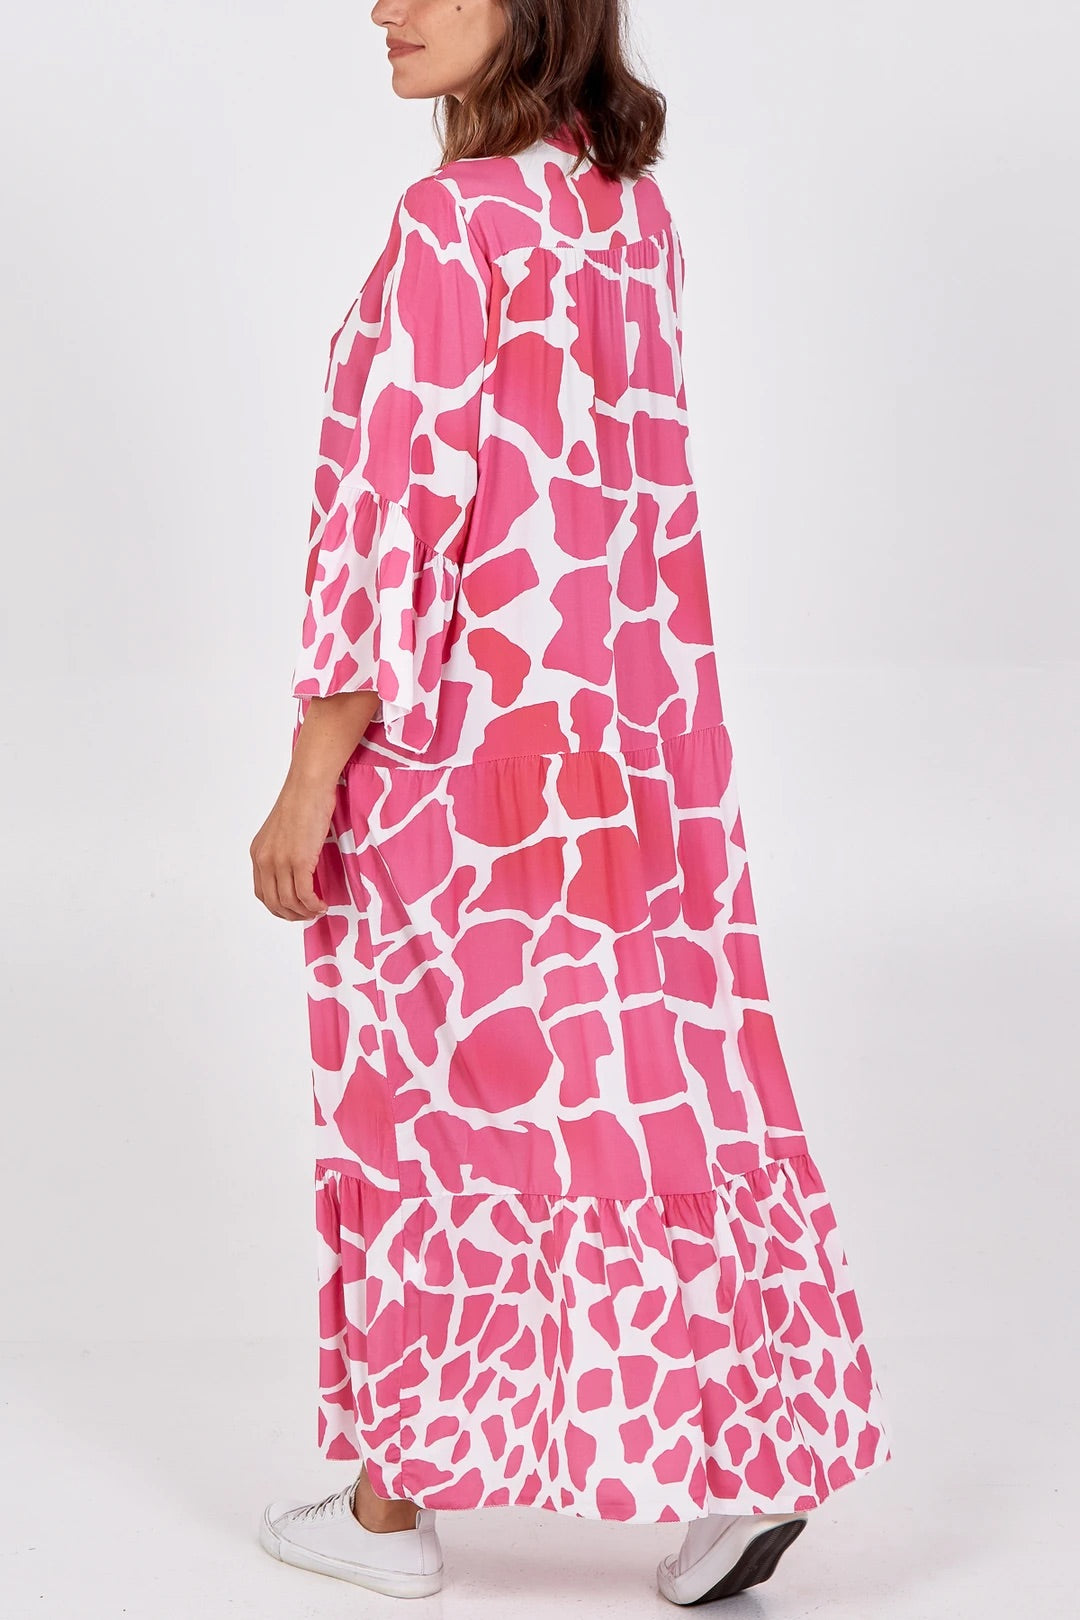 KENNEDI - Abstract Print Tiered Maxi Dress - Italian Made